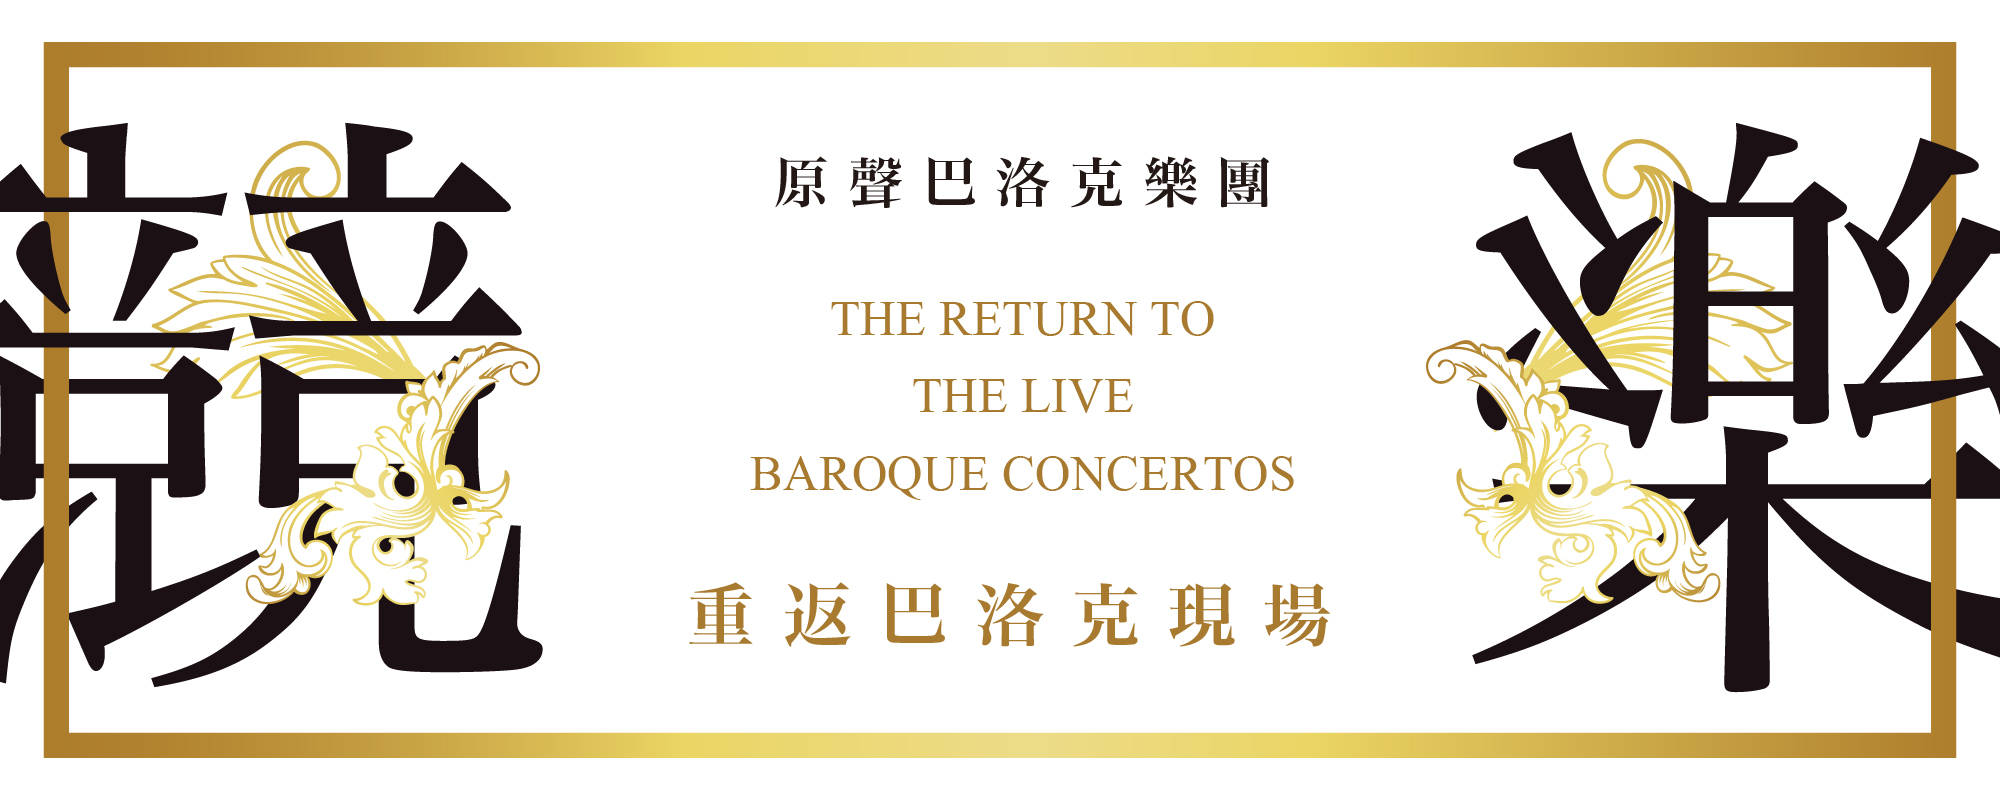 The Return to the Live Baroque Concertos